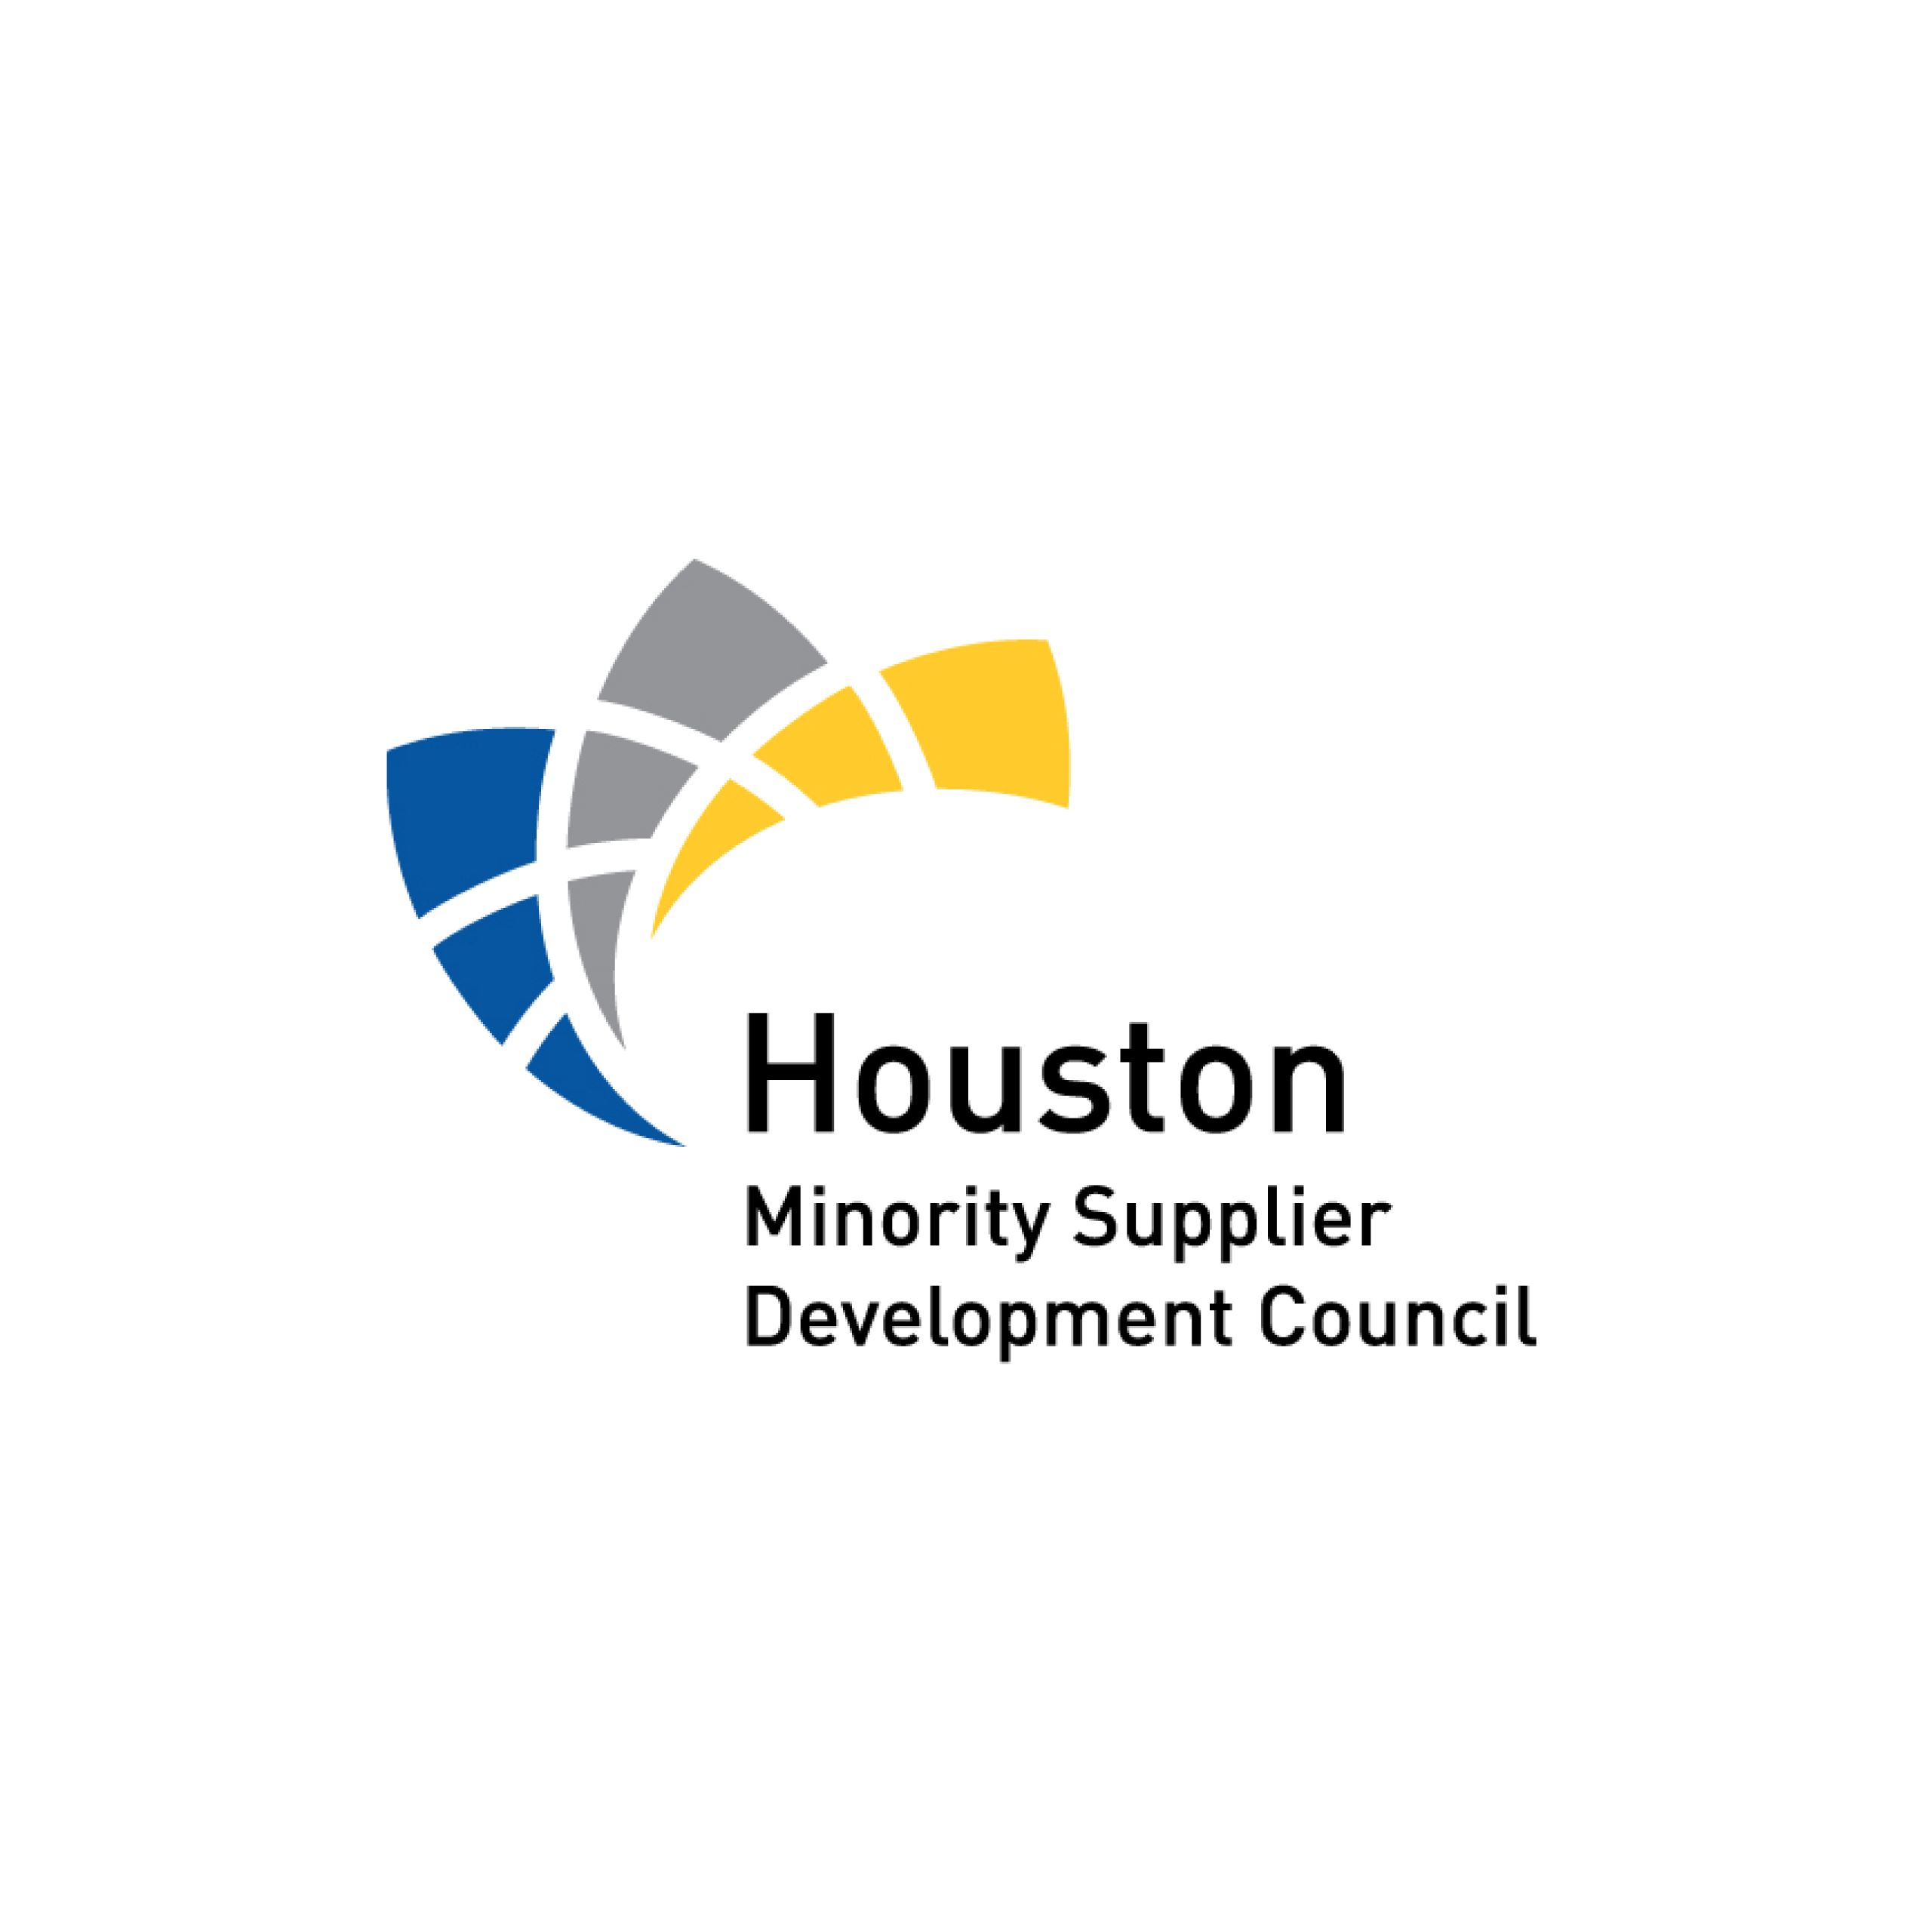 HMDSC - Houston Minority Supplier Diversity Council